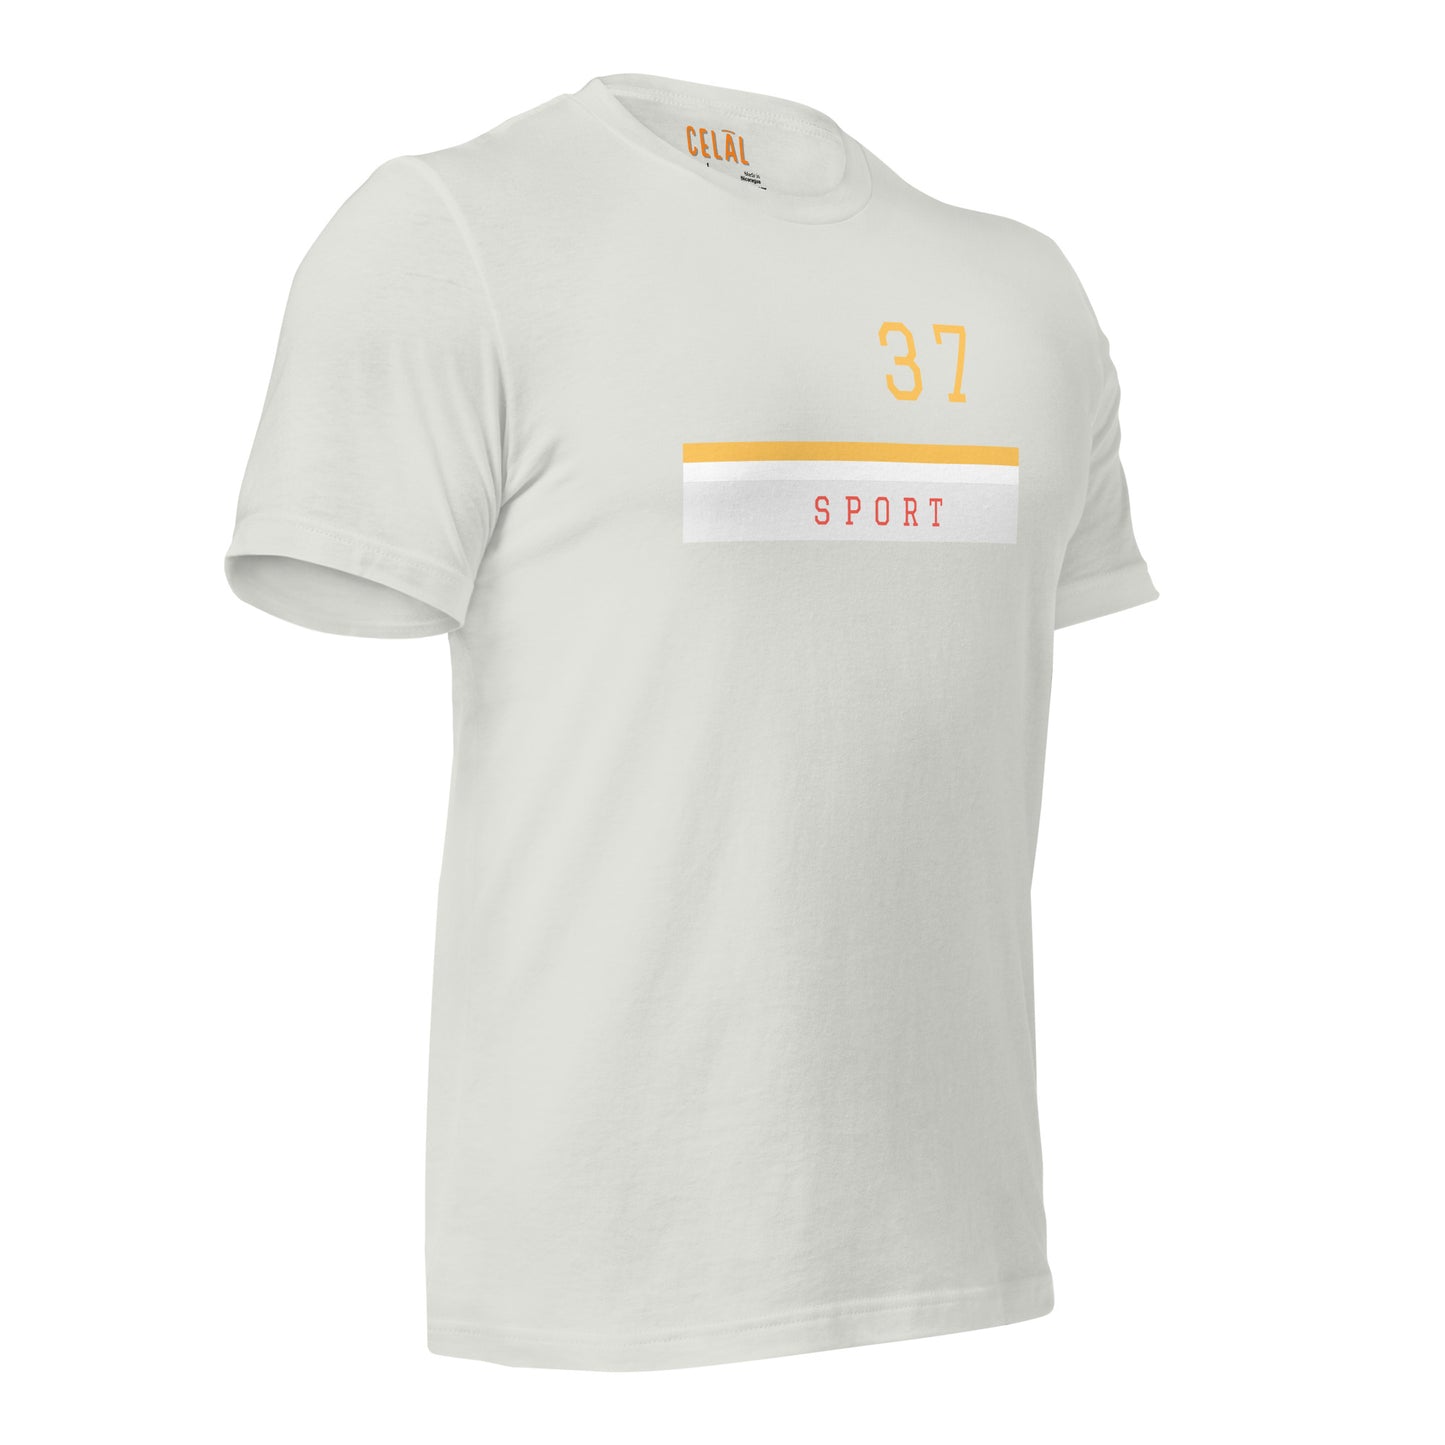 37 Unisex t-shirt